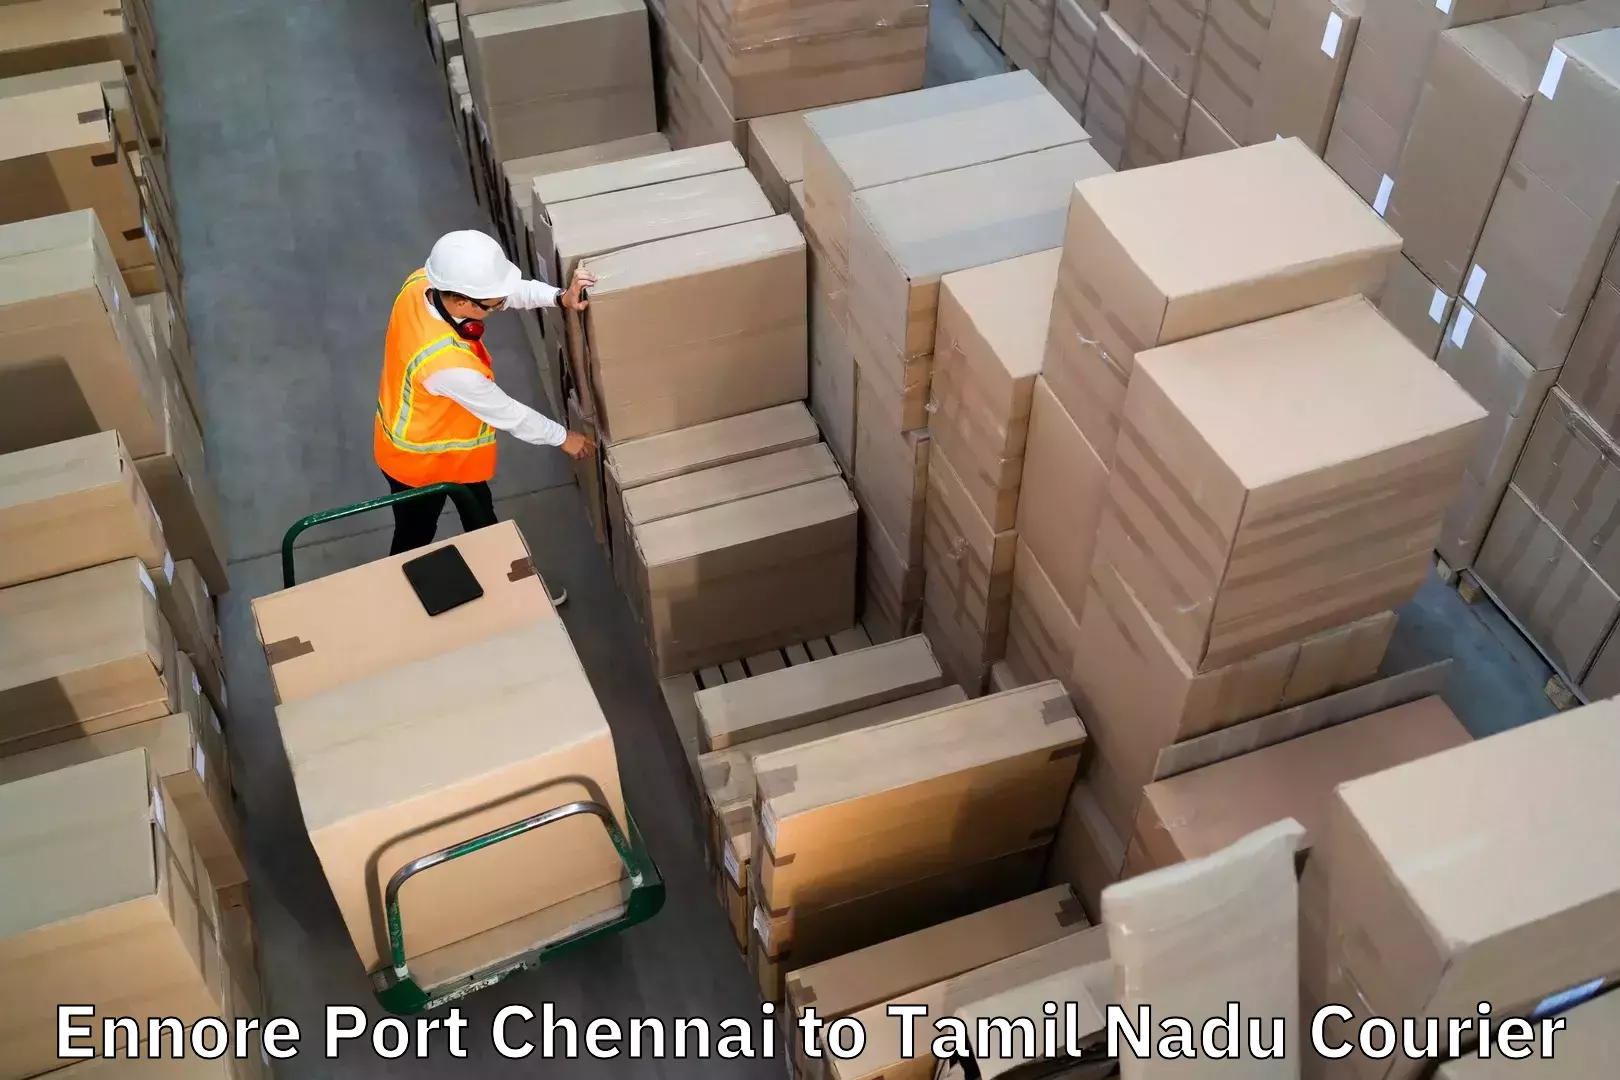 Reliable luggage courier Ennore Port Chennai to Eraiyur